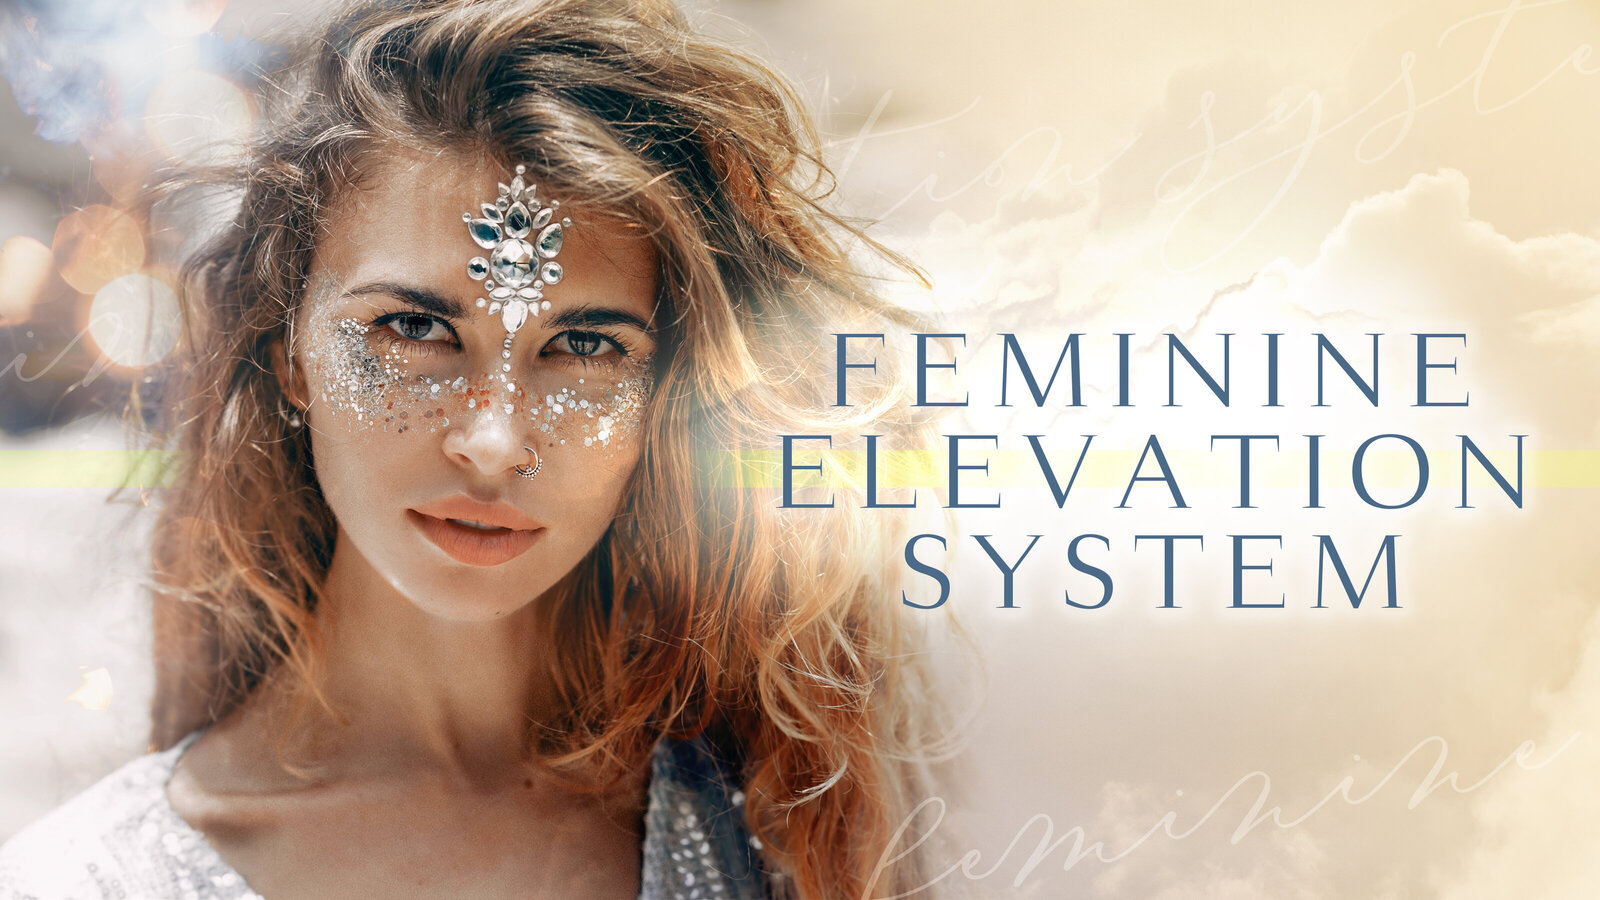 Feminine Elevation System